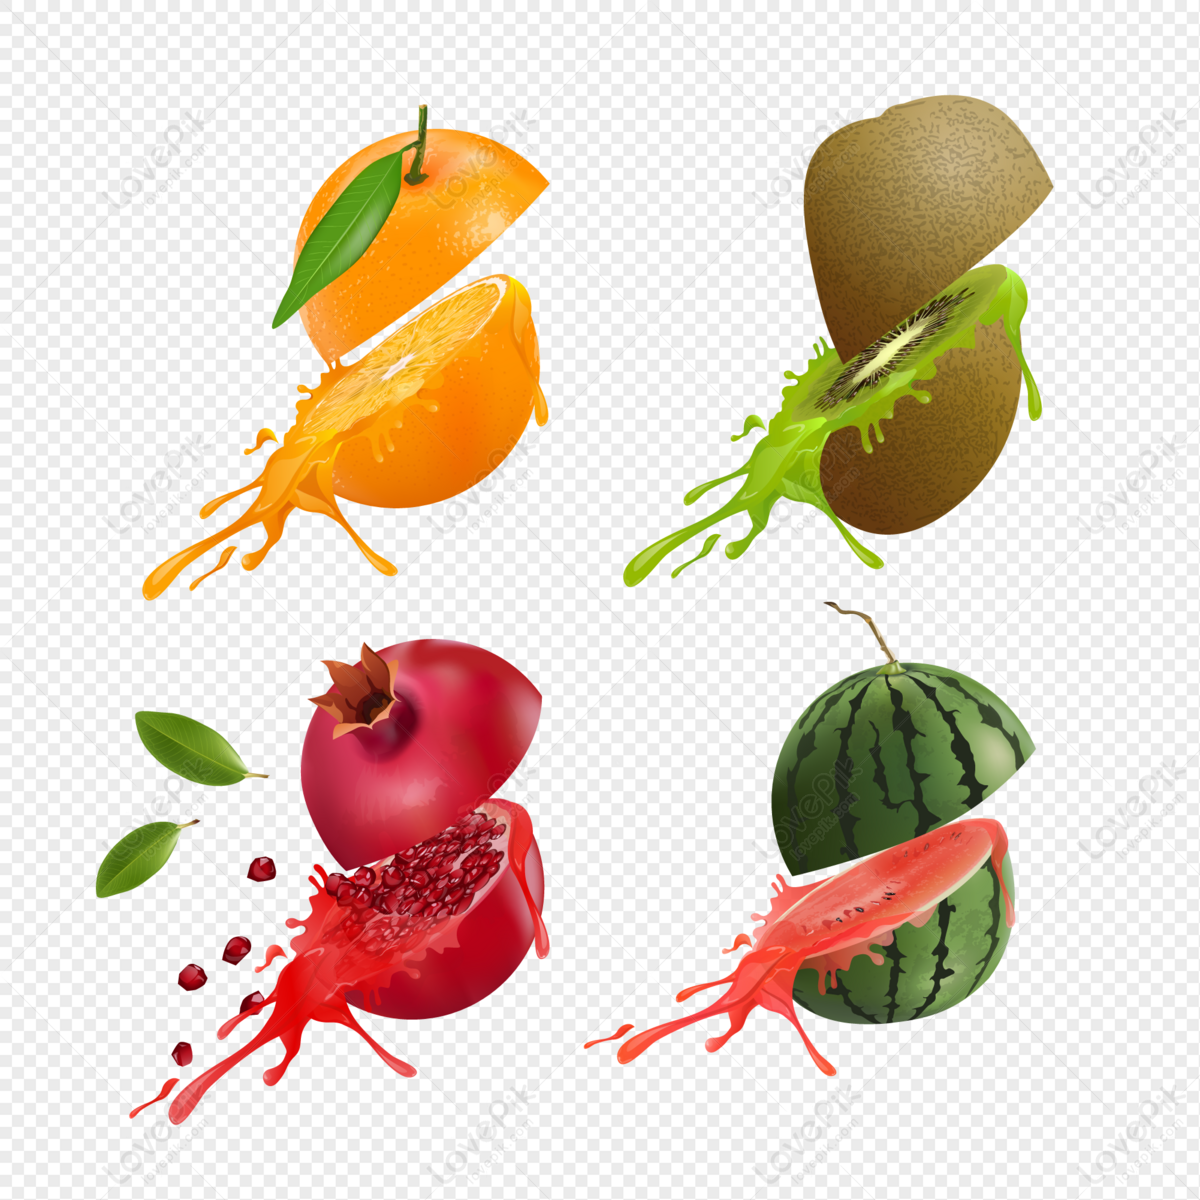 Creative Fruit Juice Splash PNG Transparent Background And Clipart Image  For Free Download - Lovepik | 401557430